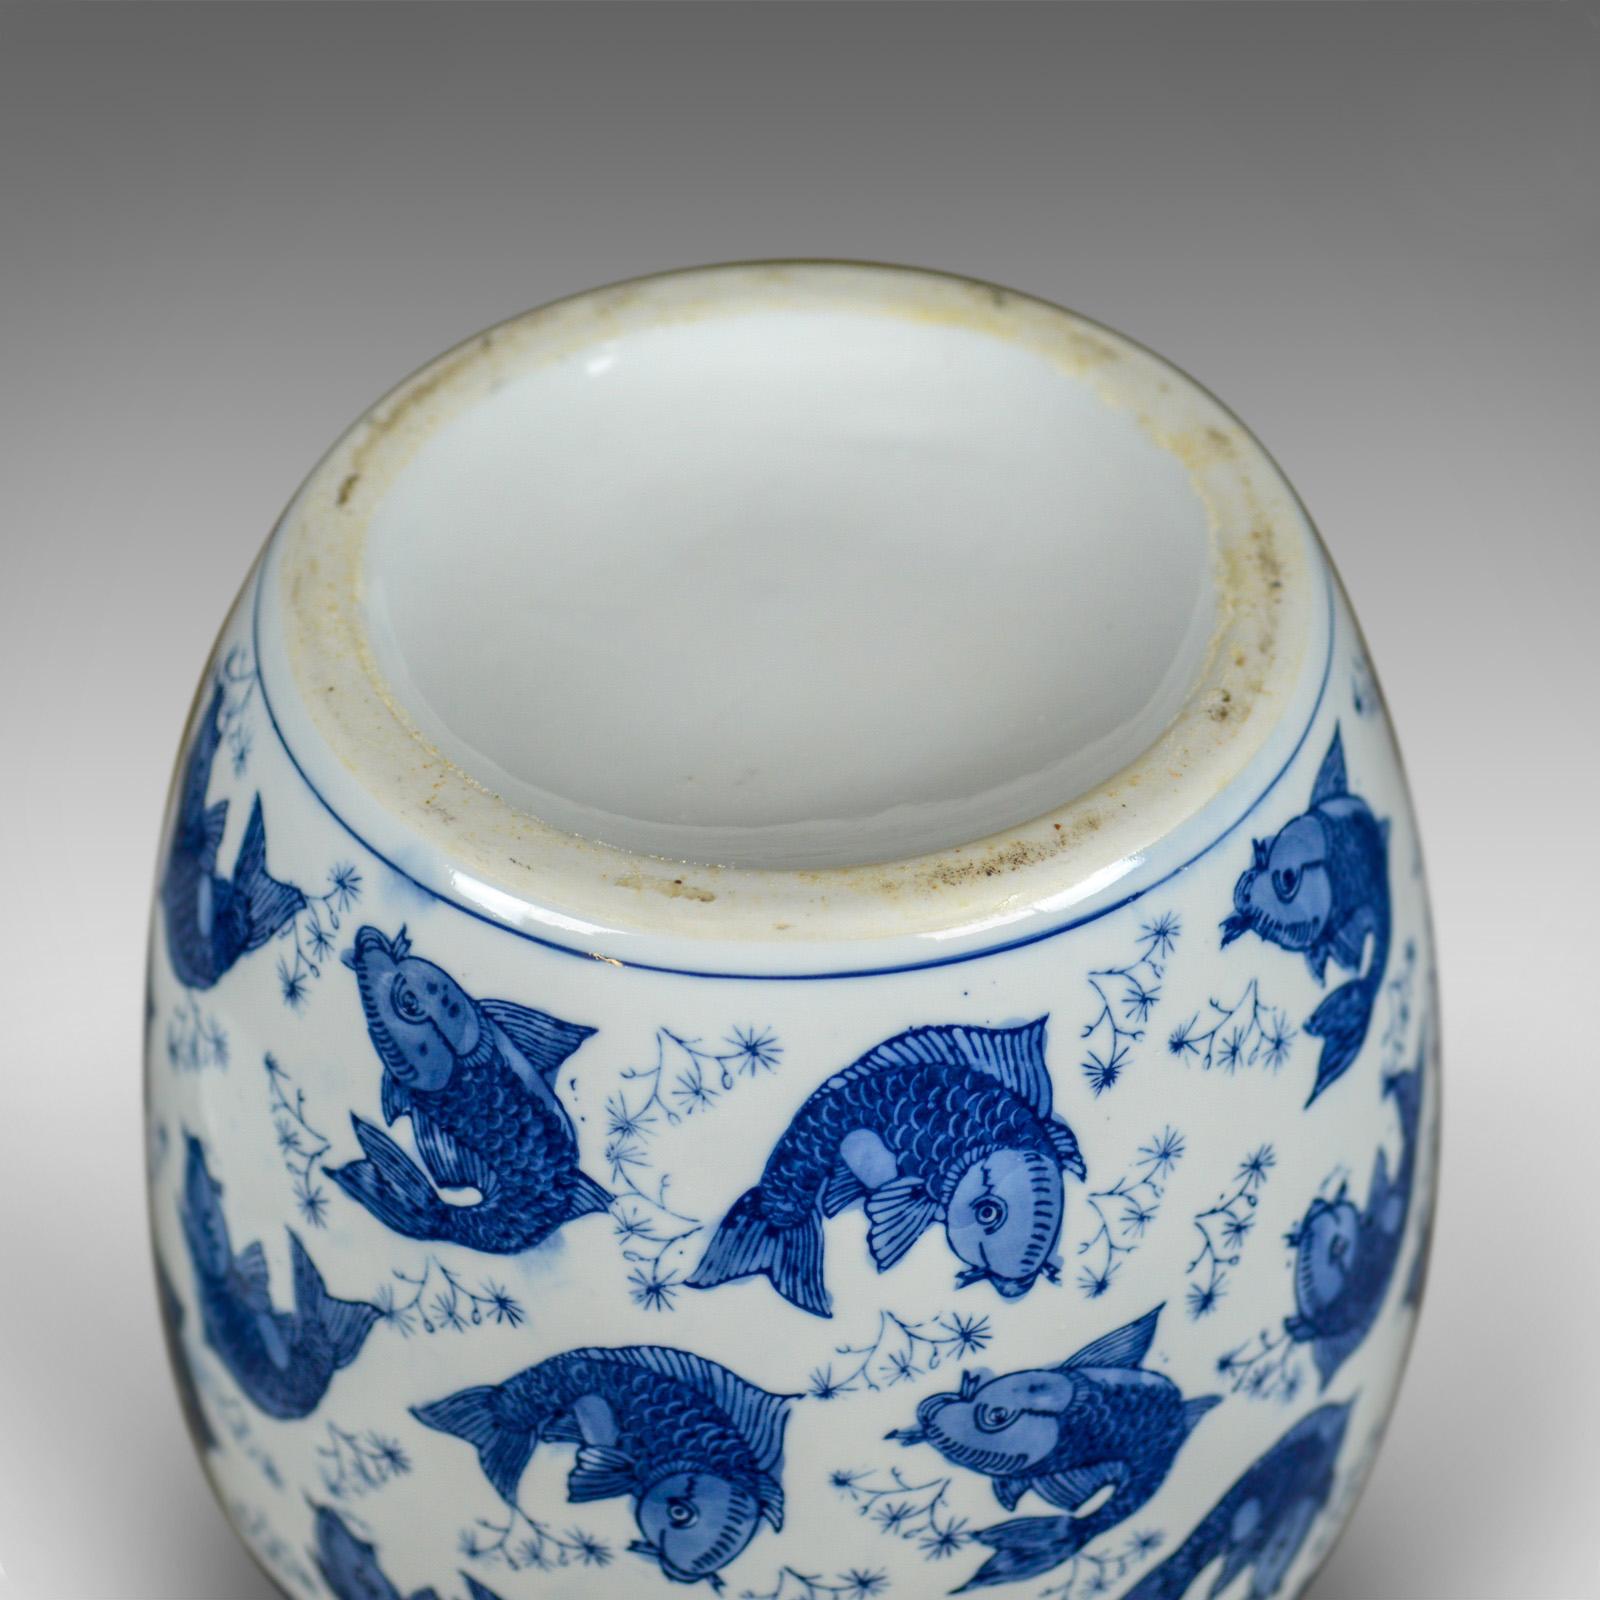 Chinese Export Large Oriental Ginger Jar, Vintage, Decorative Ceramic Vase, Koi Carp Fish